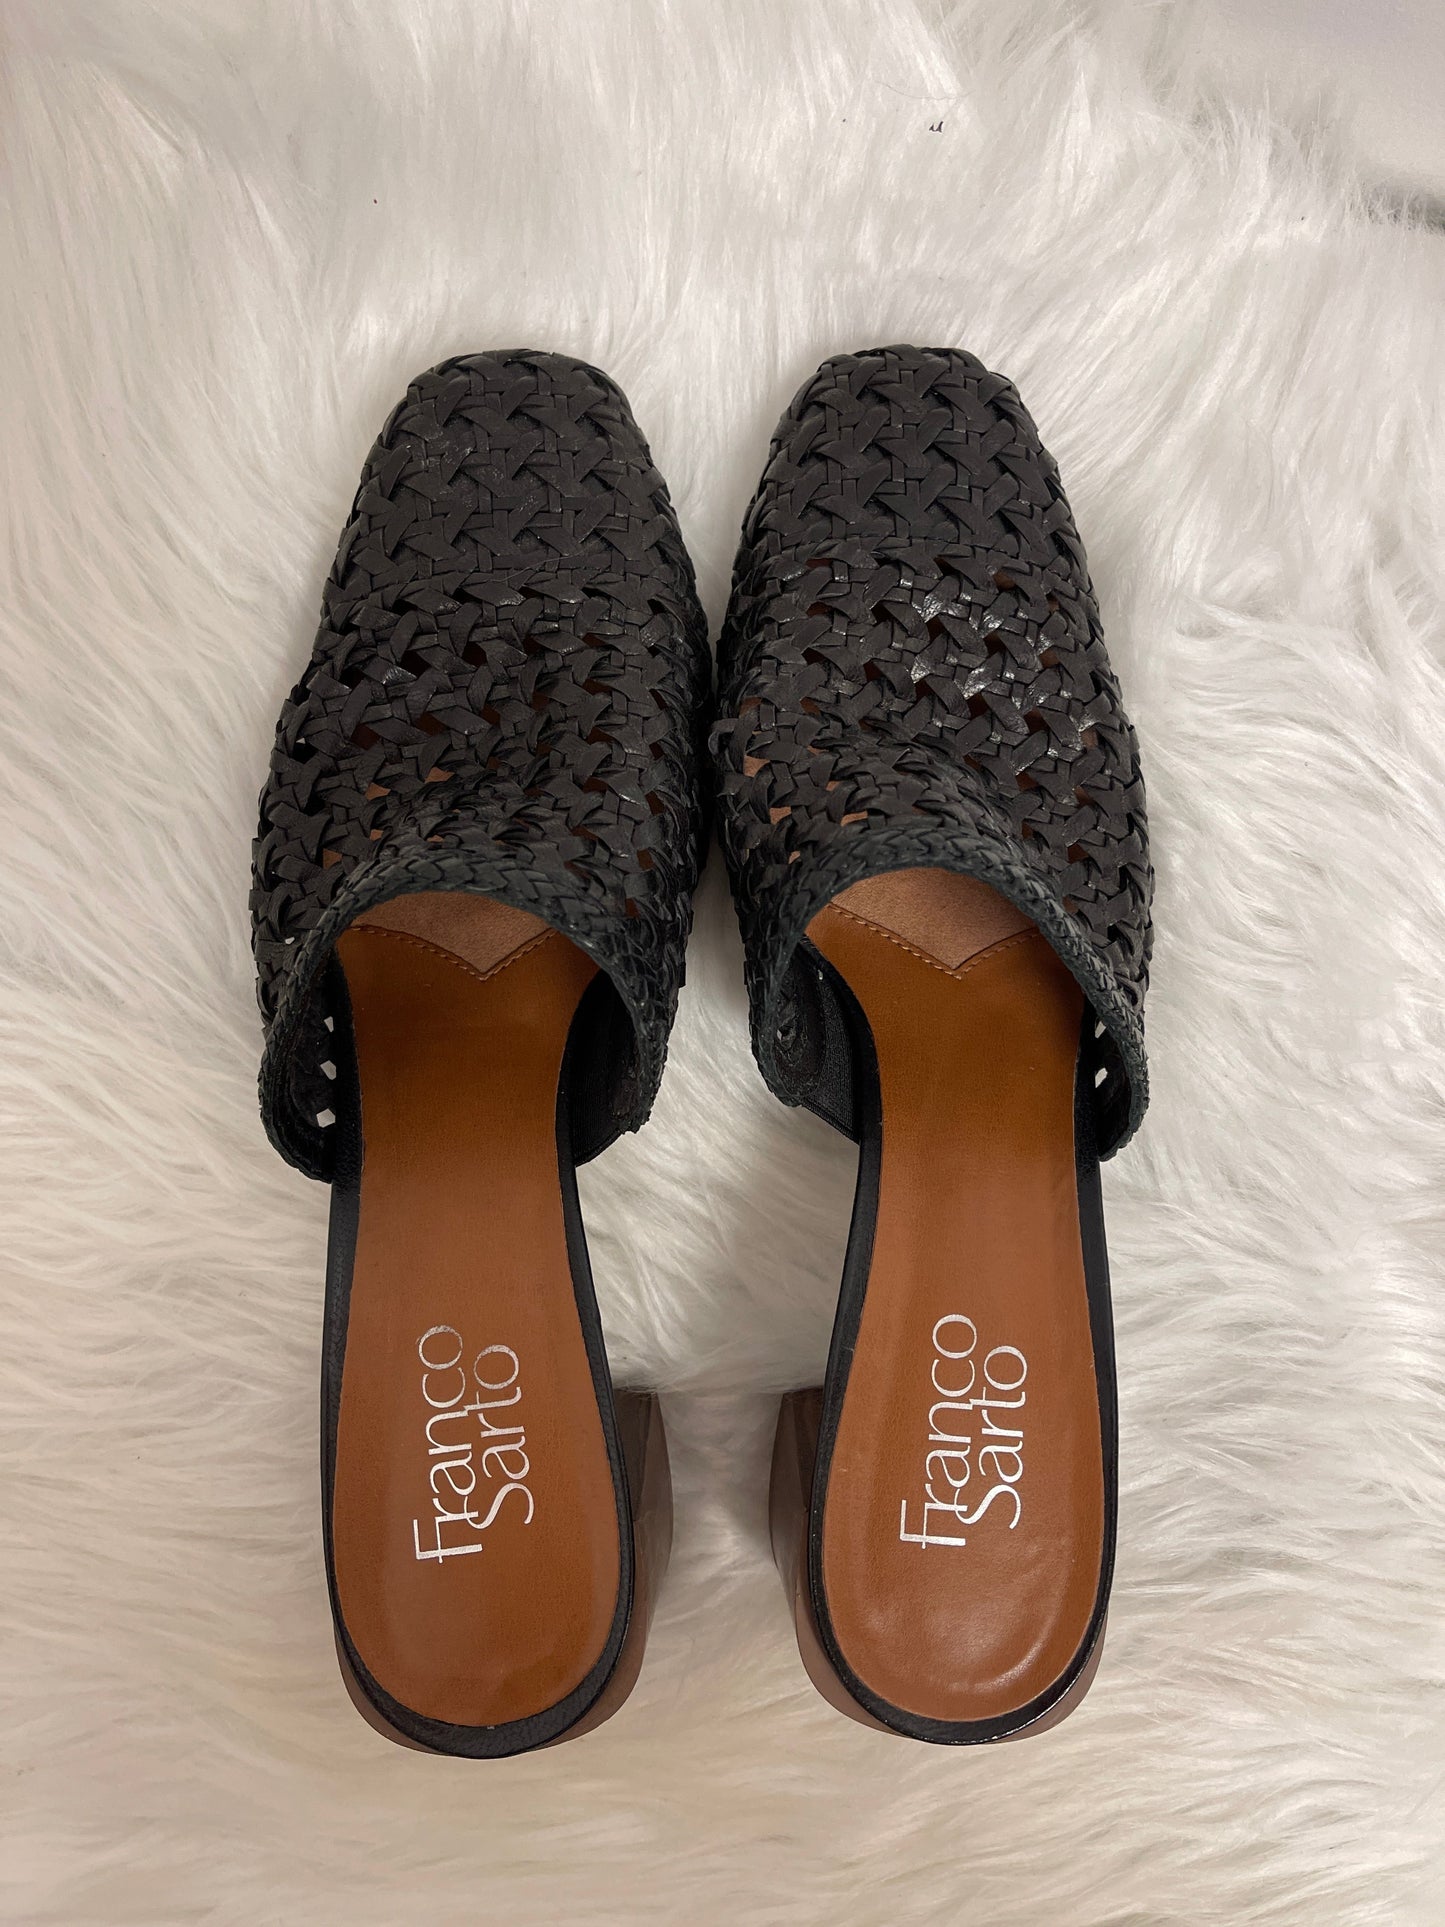 Black Shoes Heels Block Franco Sarto, Size 8